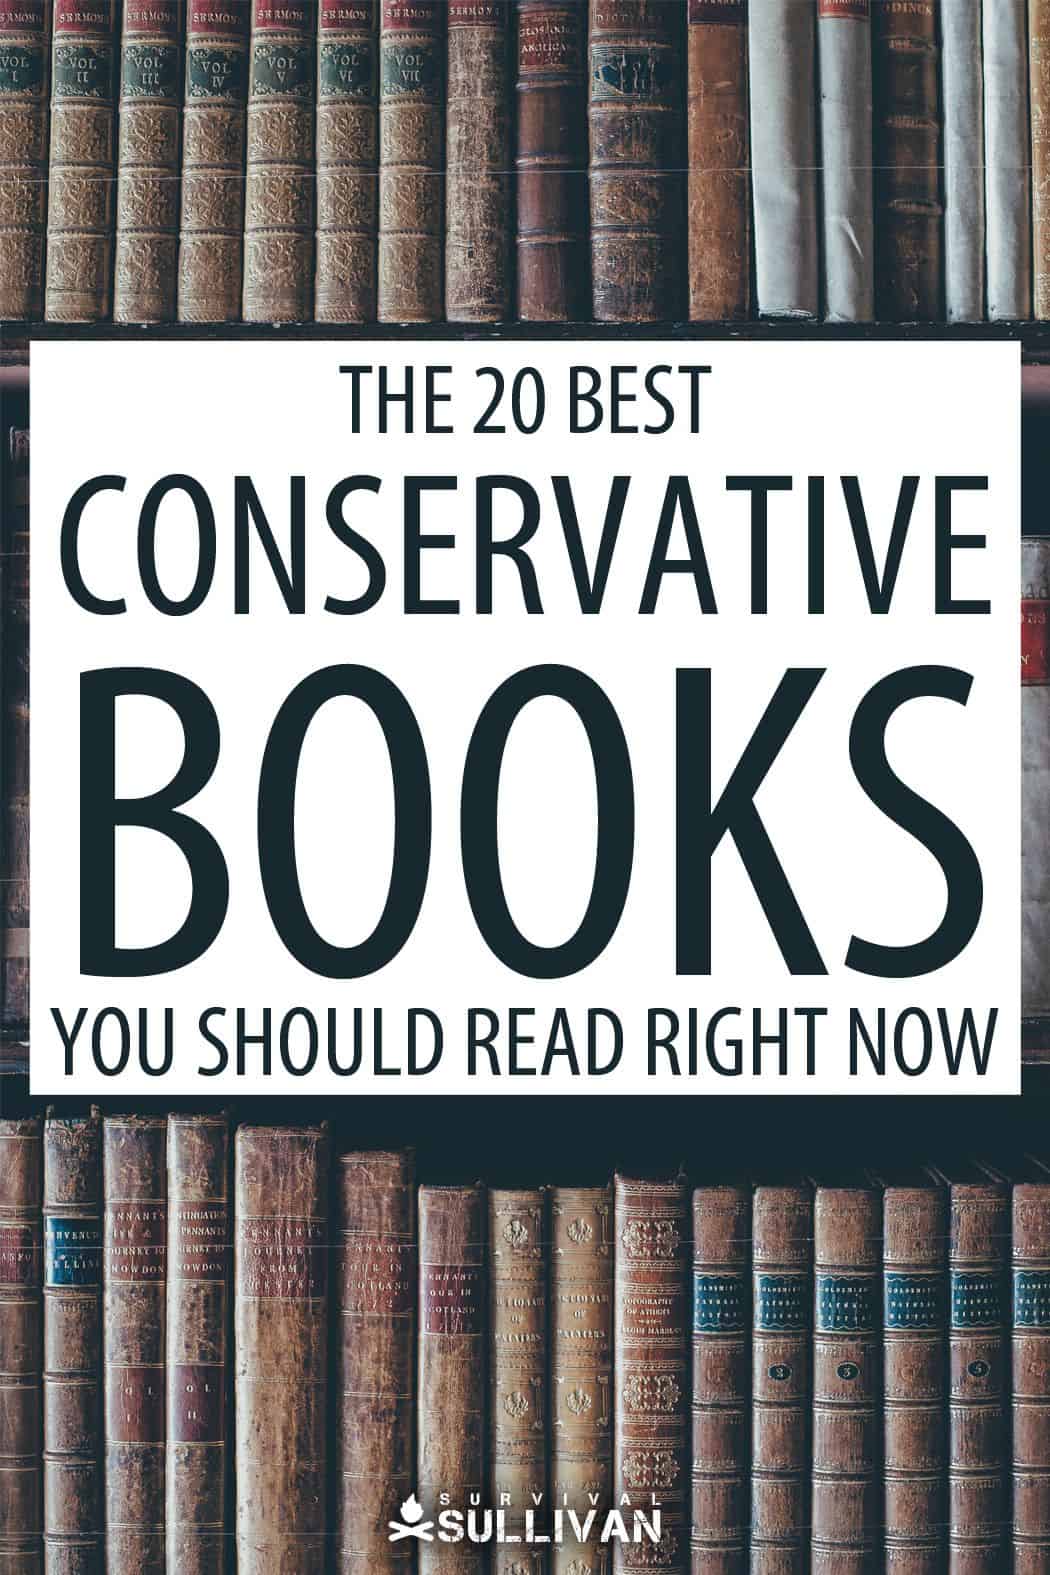 conservative books pinterest image